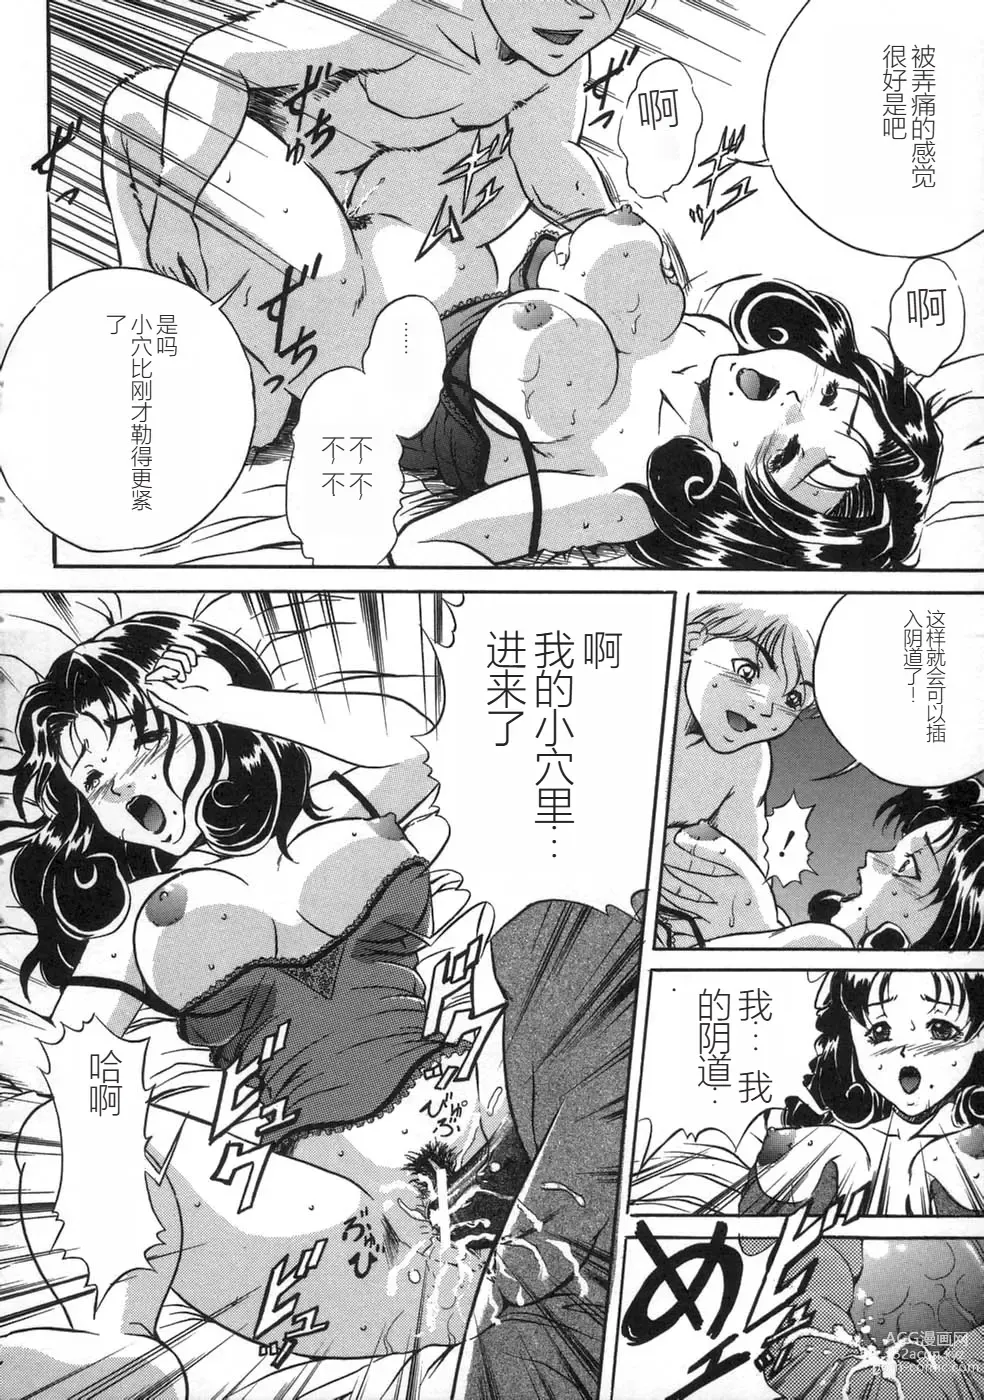 Page 148 of manga Oshioki - Punishment